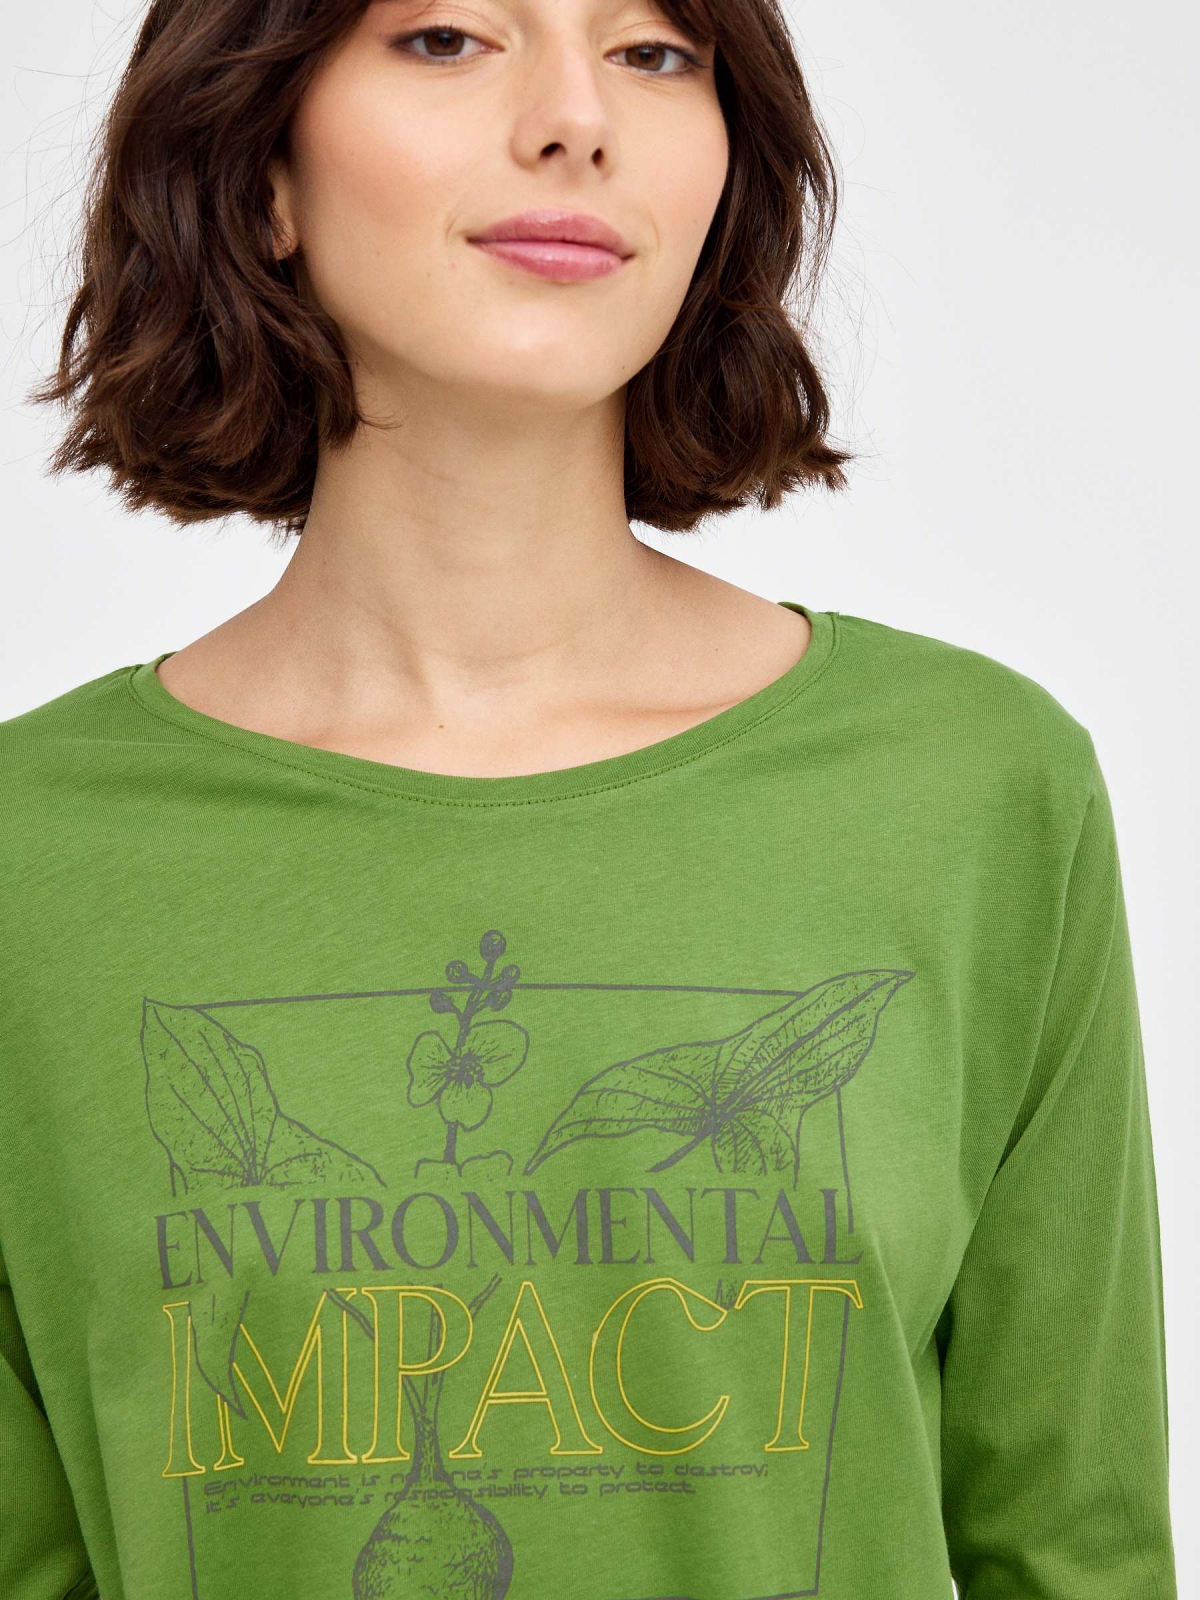 T-shirt ambiental verde oliva vista detalhe